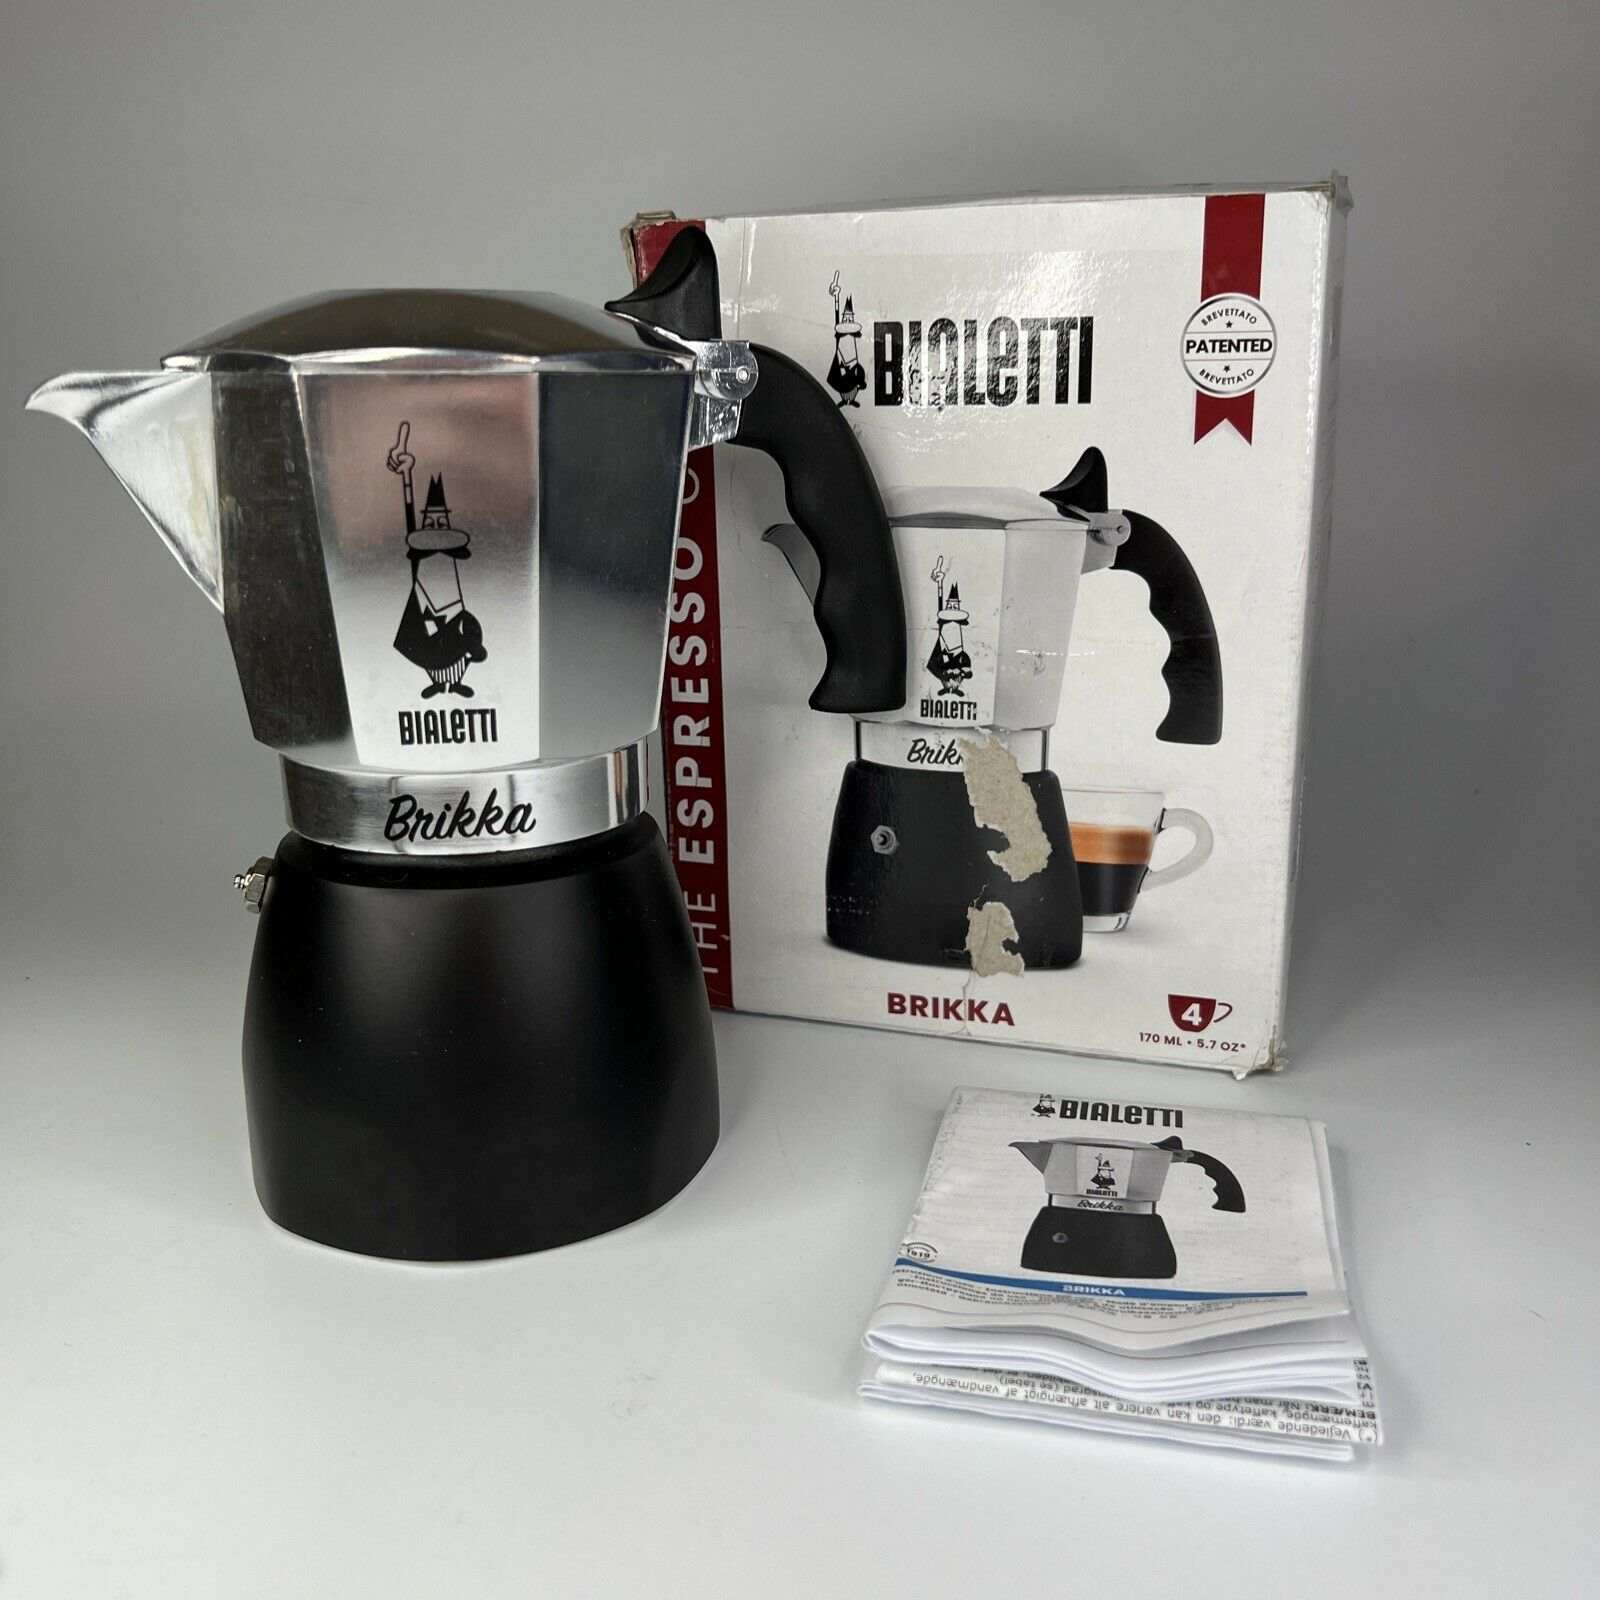 Bialetti "Brikka" Stovetop Coffee Maker Moka, 170mL